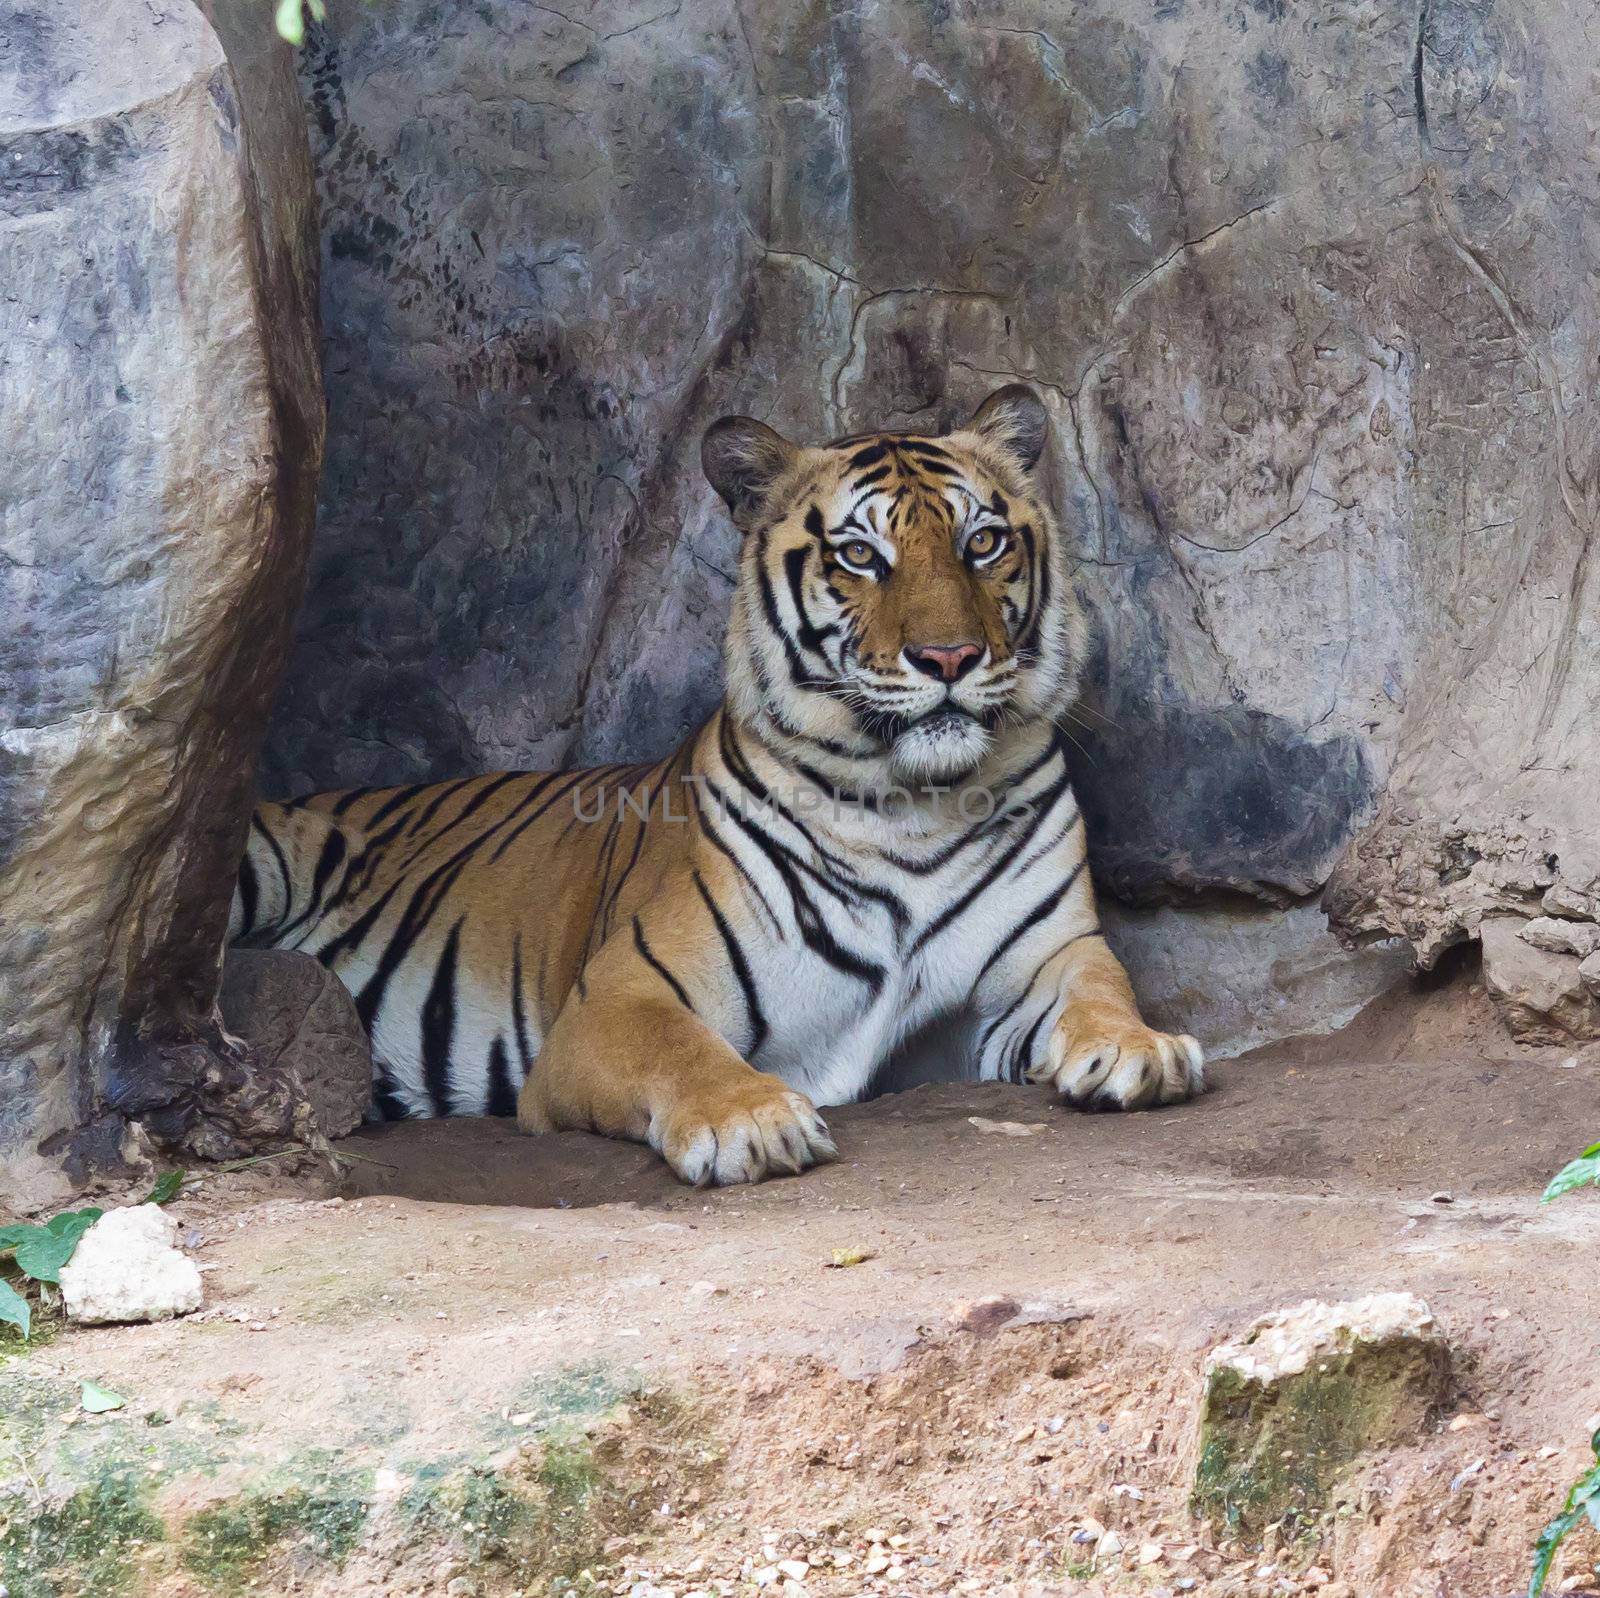 sumatran tiger by tungphoto